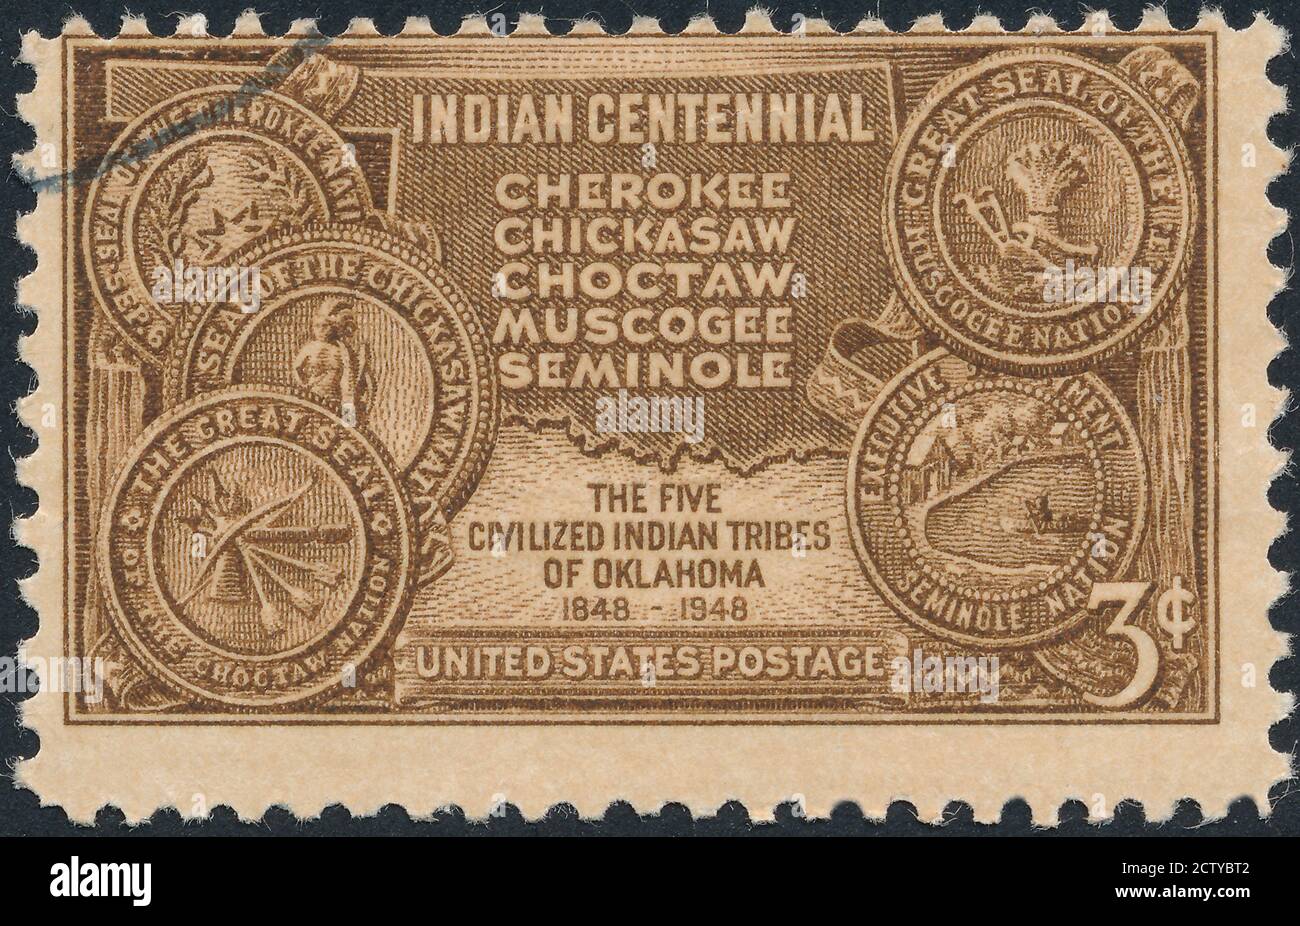 Indian Territory of Oklahoma Briefmarkenstockfoto Oklahoma, USA, Cherokee Culture, Cherokee Ethnicity, Indian Culture.abgesagte Briefmarke aus dem Vereinigten Sta Stockfoto